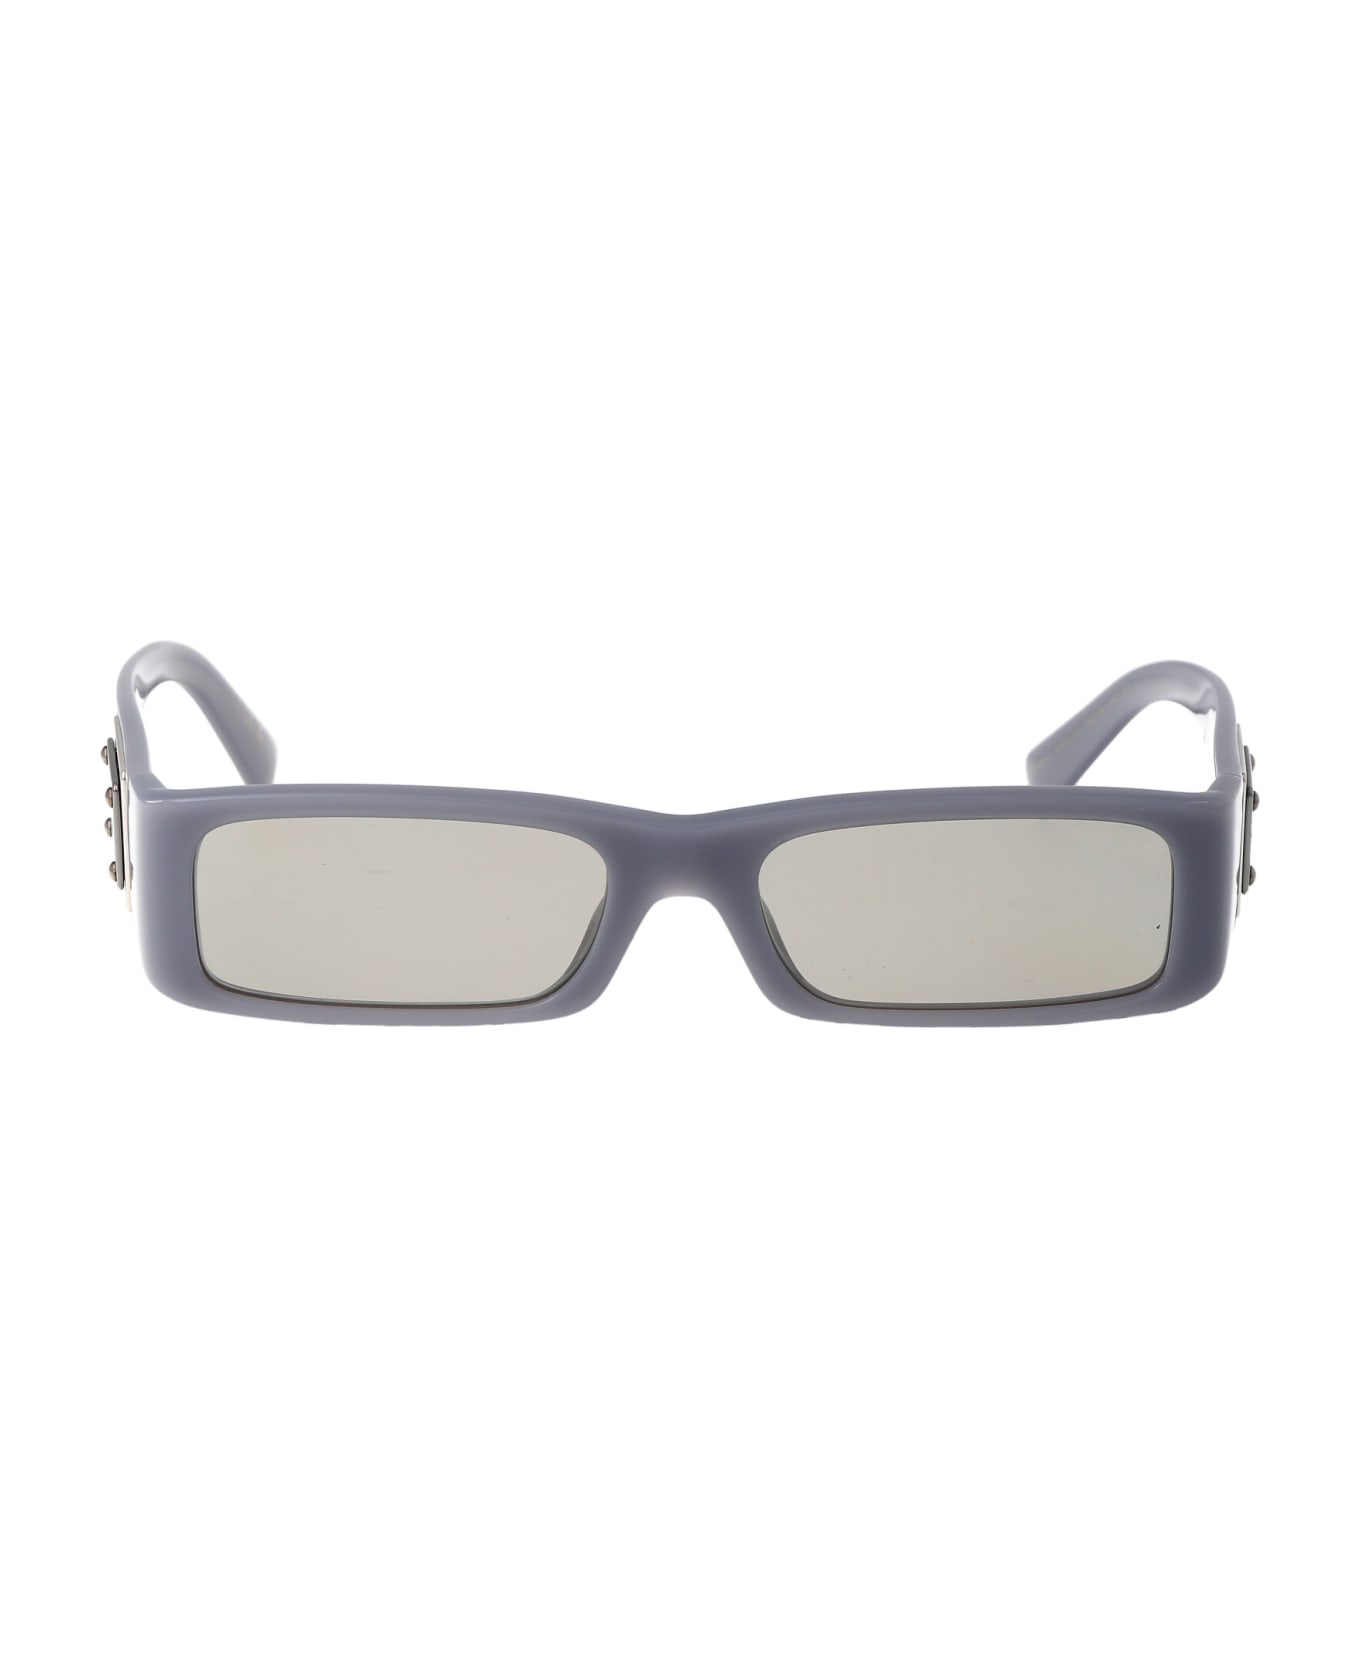 Dolce & Gabbana Eyewear 0dg4444 Sunglasses - 30906G Grey サングラス